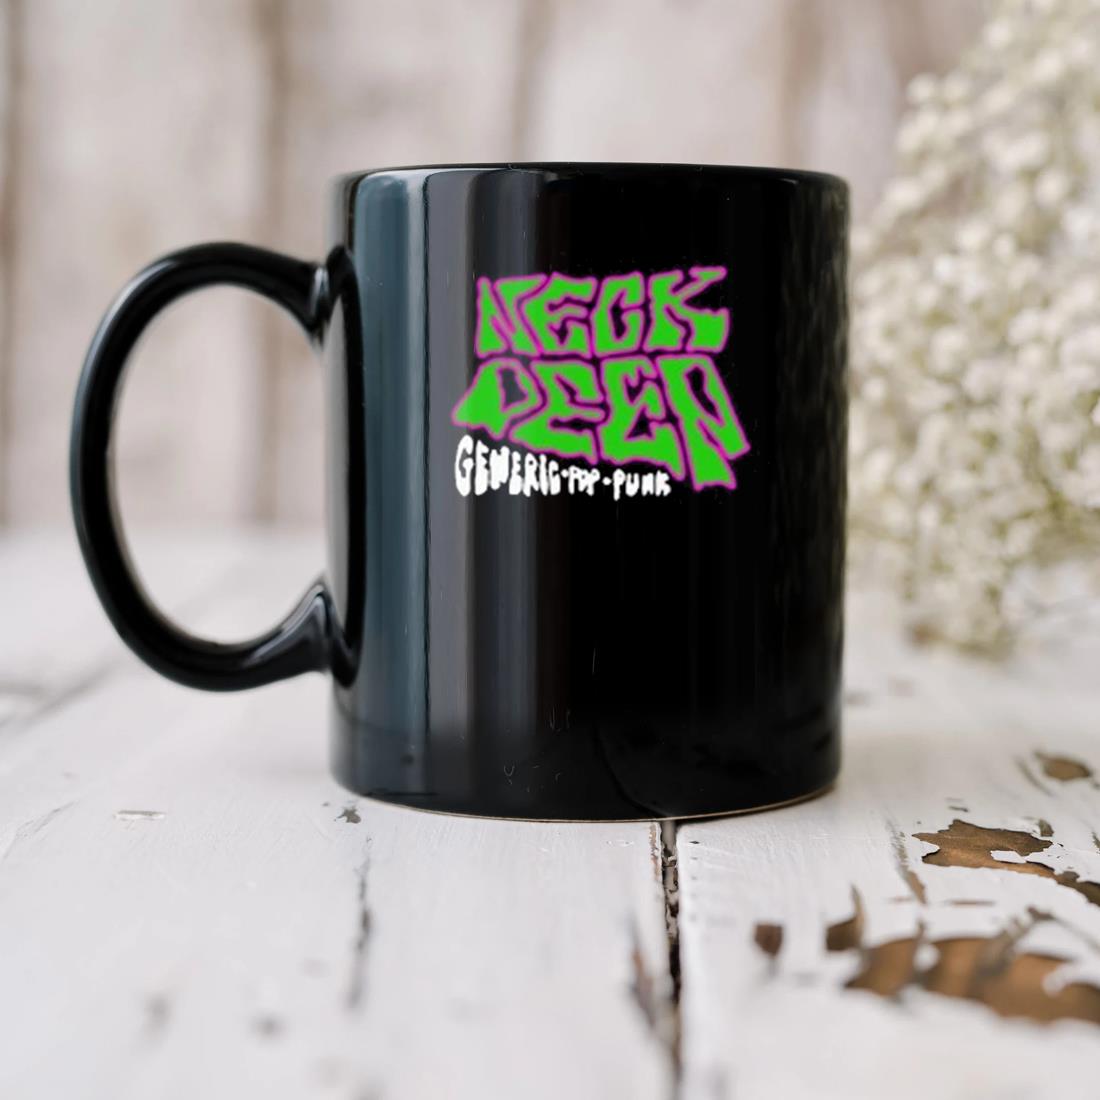 Neck Deep 8 Ball 2023 Generic Pop Punk 2023 Mug